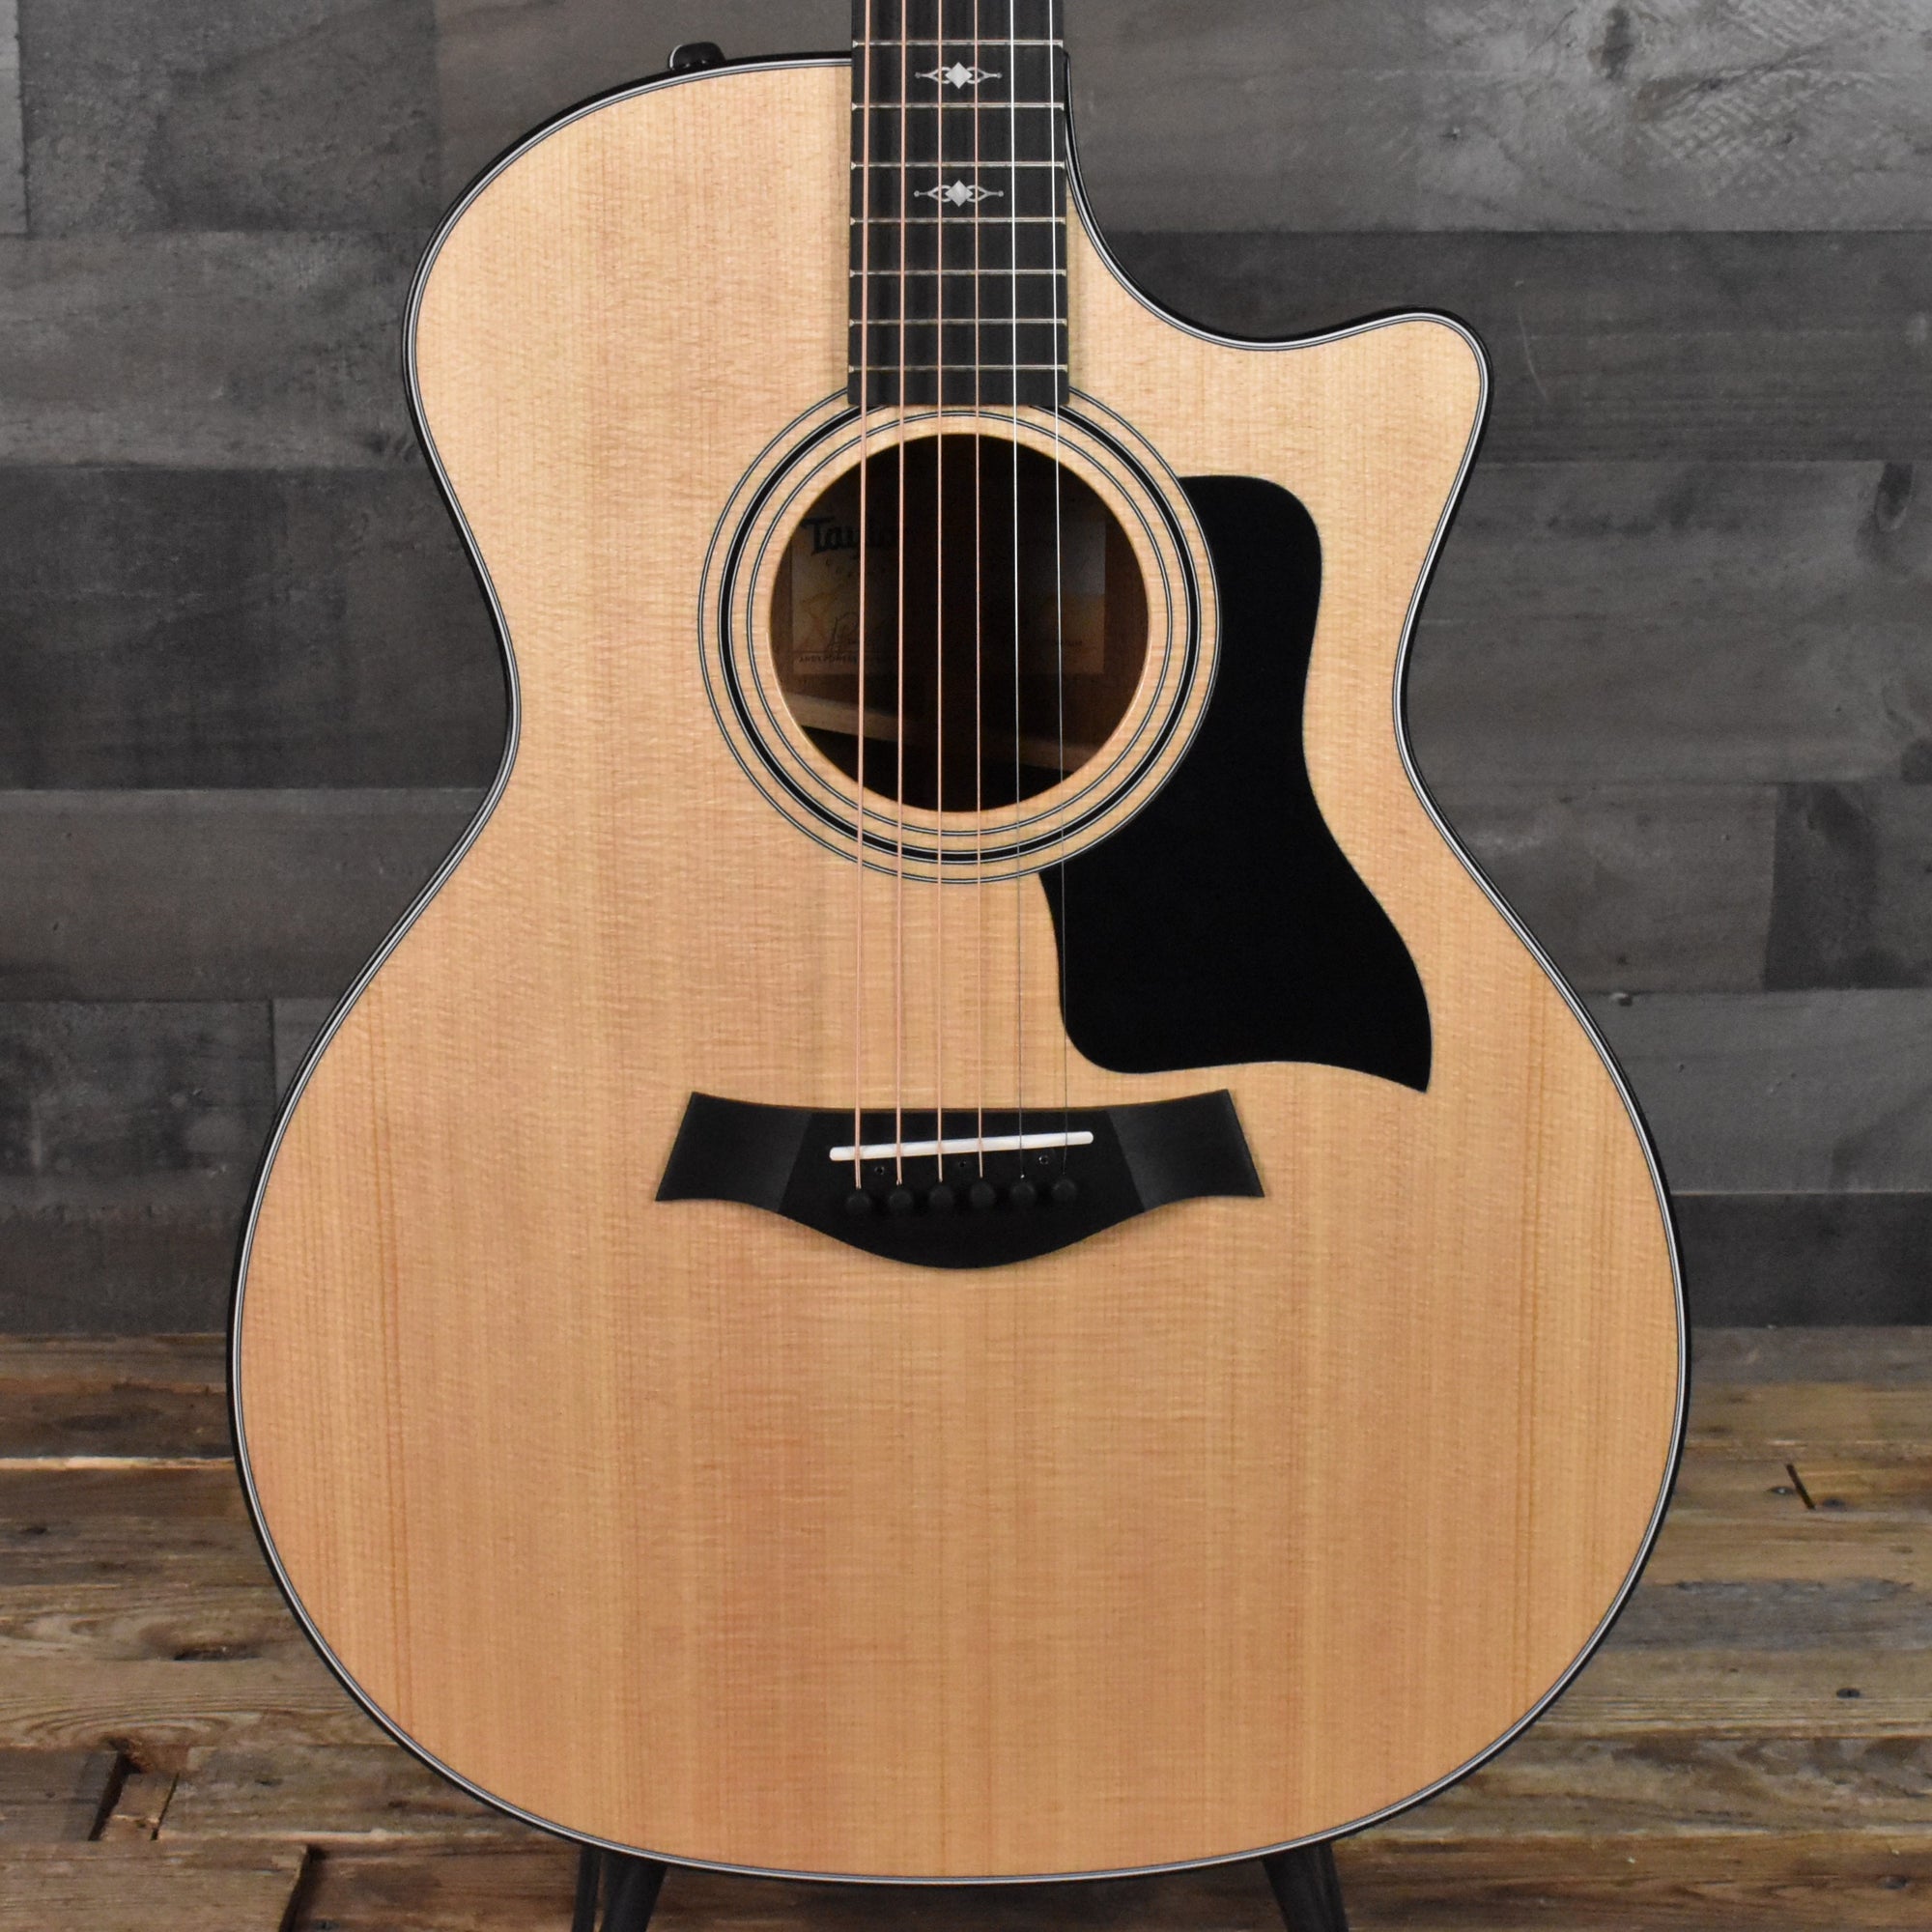 Taylor 916ce - Five Star Guitars